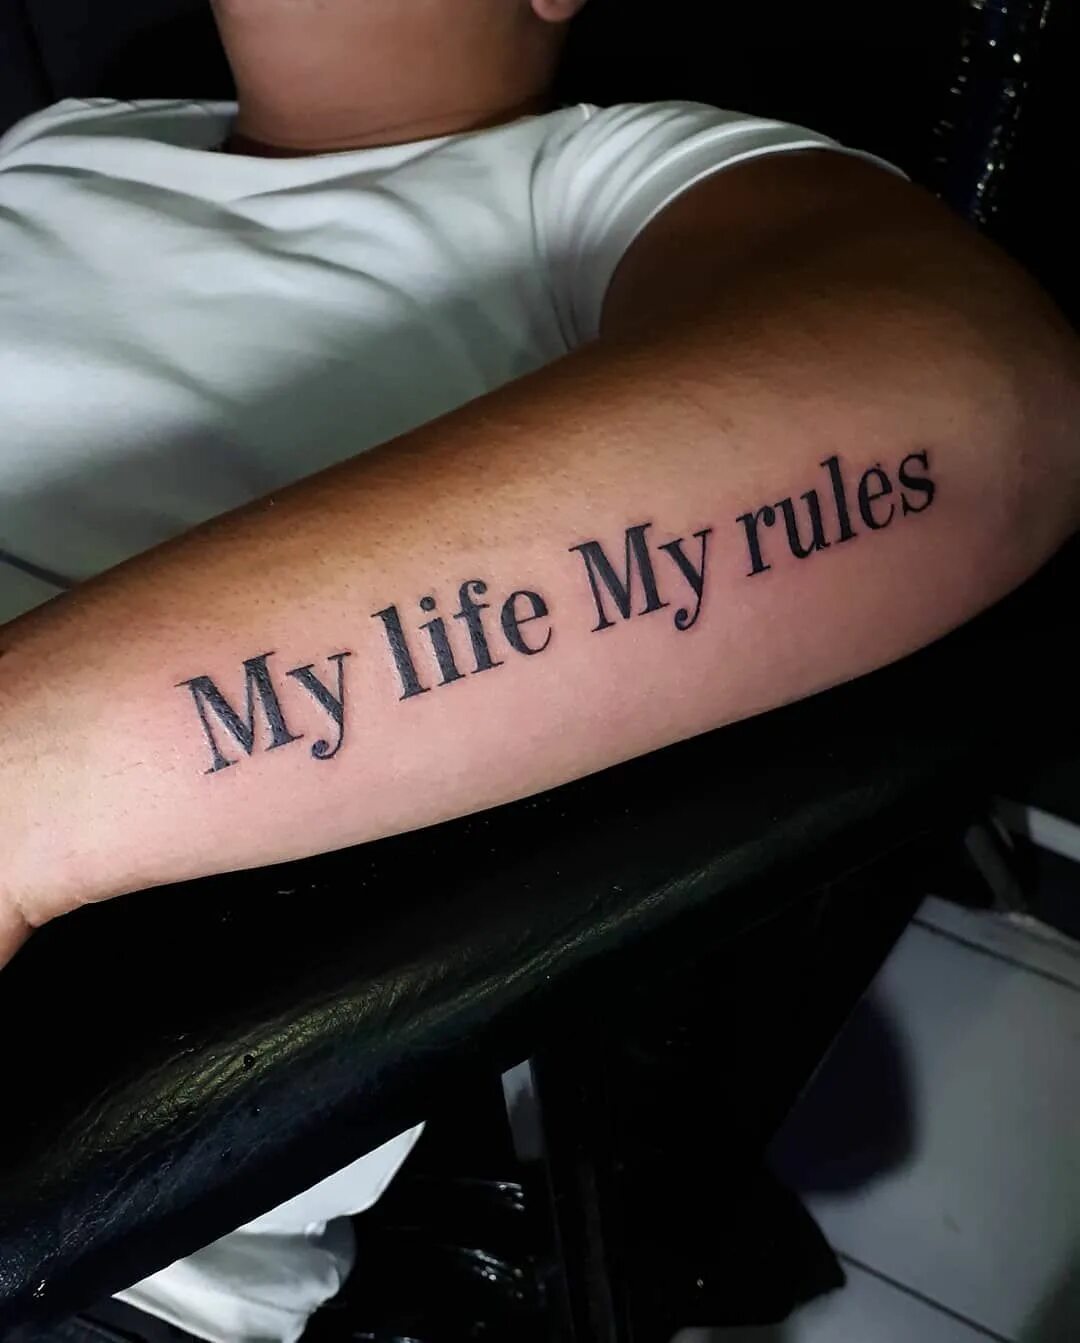 Me life my rules. Тату надписи. My Life my Rules тату. Тату надпись my Life my Rules. My Life my Rules Татуировка.